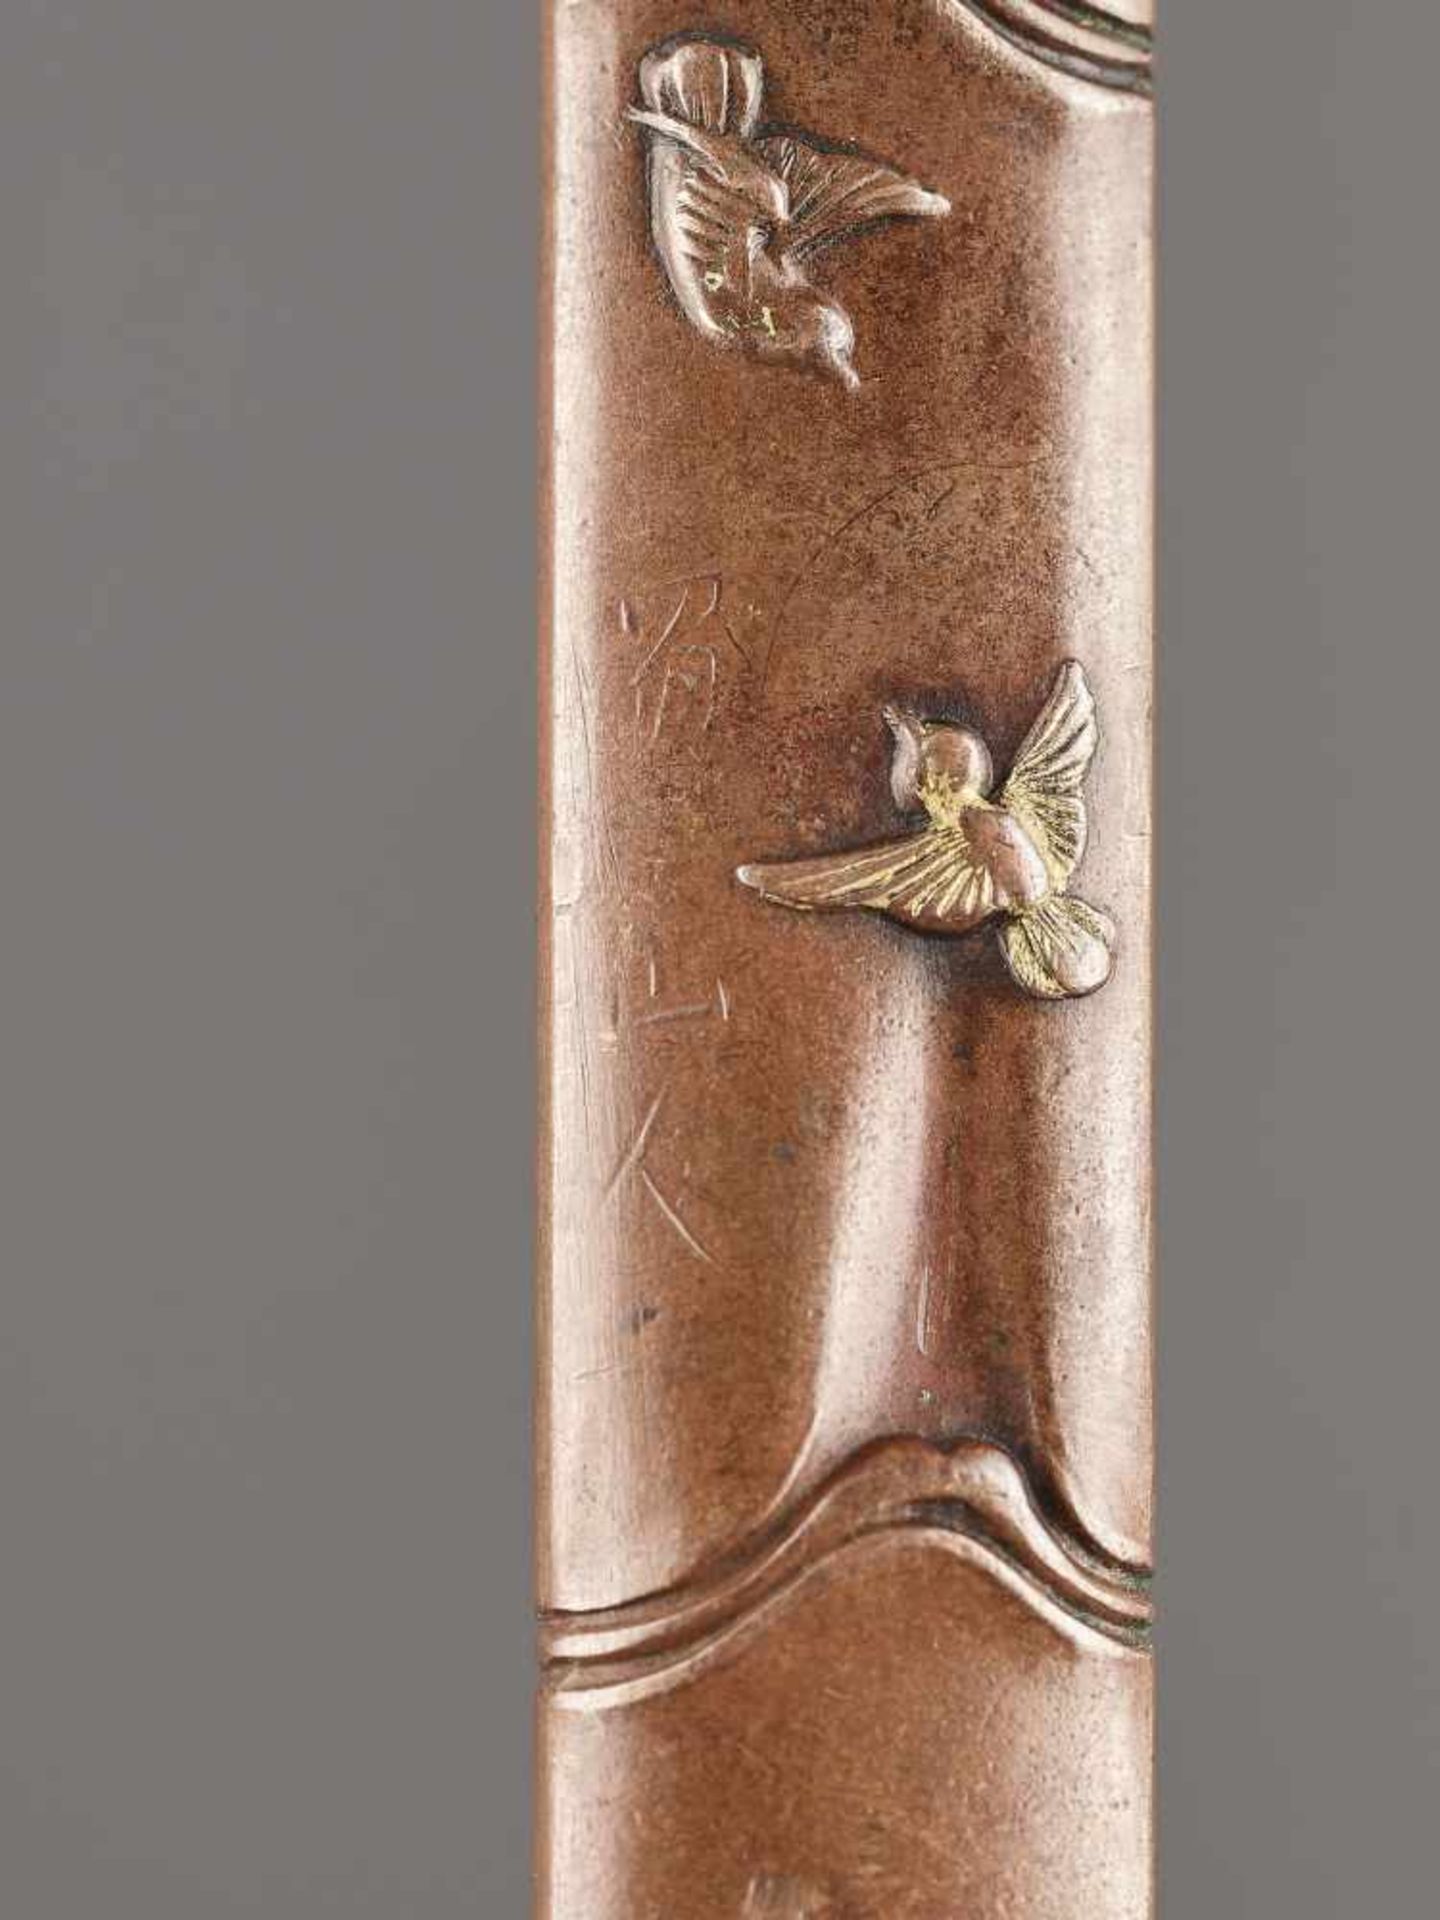 A COPPER KOZUKA HANDLE DEPICTING A WAYFARER, BAMBOO AND BIRDS Unsigned, kozuka handle, copper and - Image 4 of 5